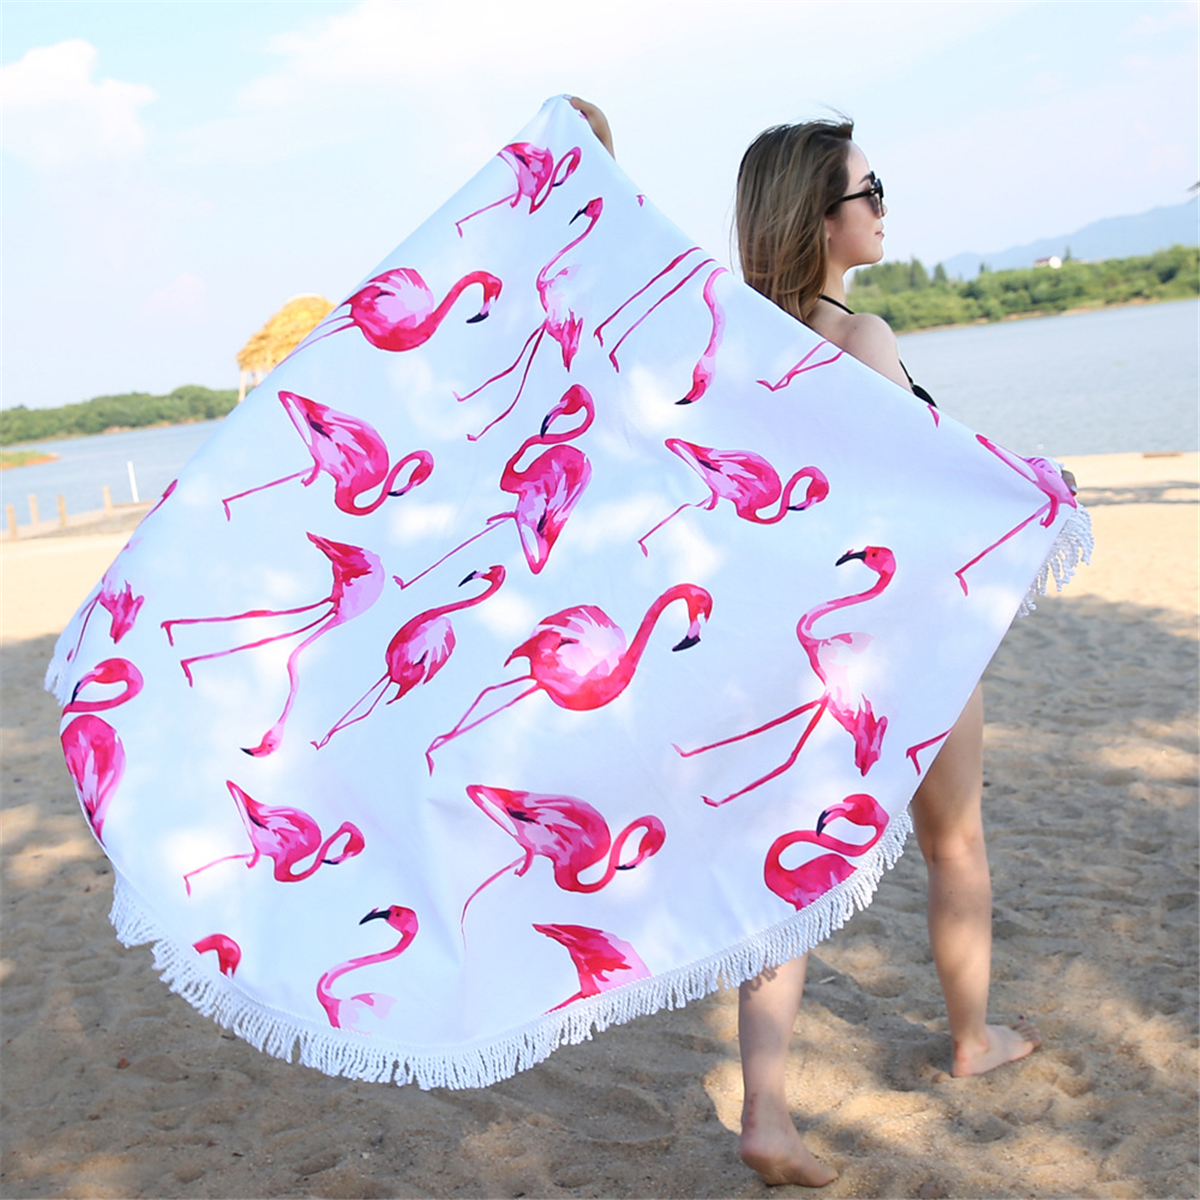 Fashion-Flamingo-450G-Round-Beach-Towel-With-Tassels-Microfiber-150cm-Picnic-Blanket-Beach-Cover-Up-1295953-7